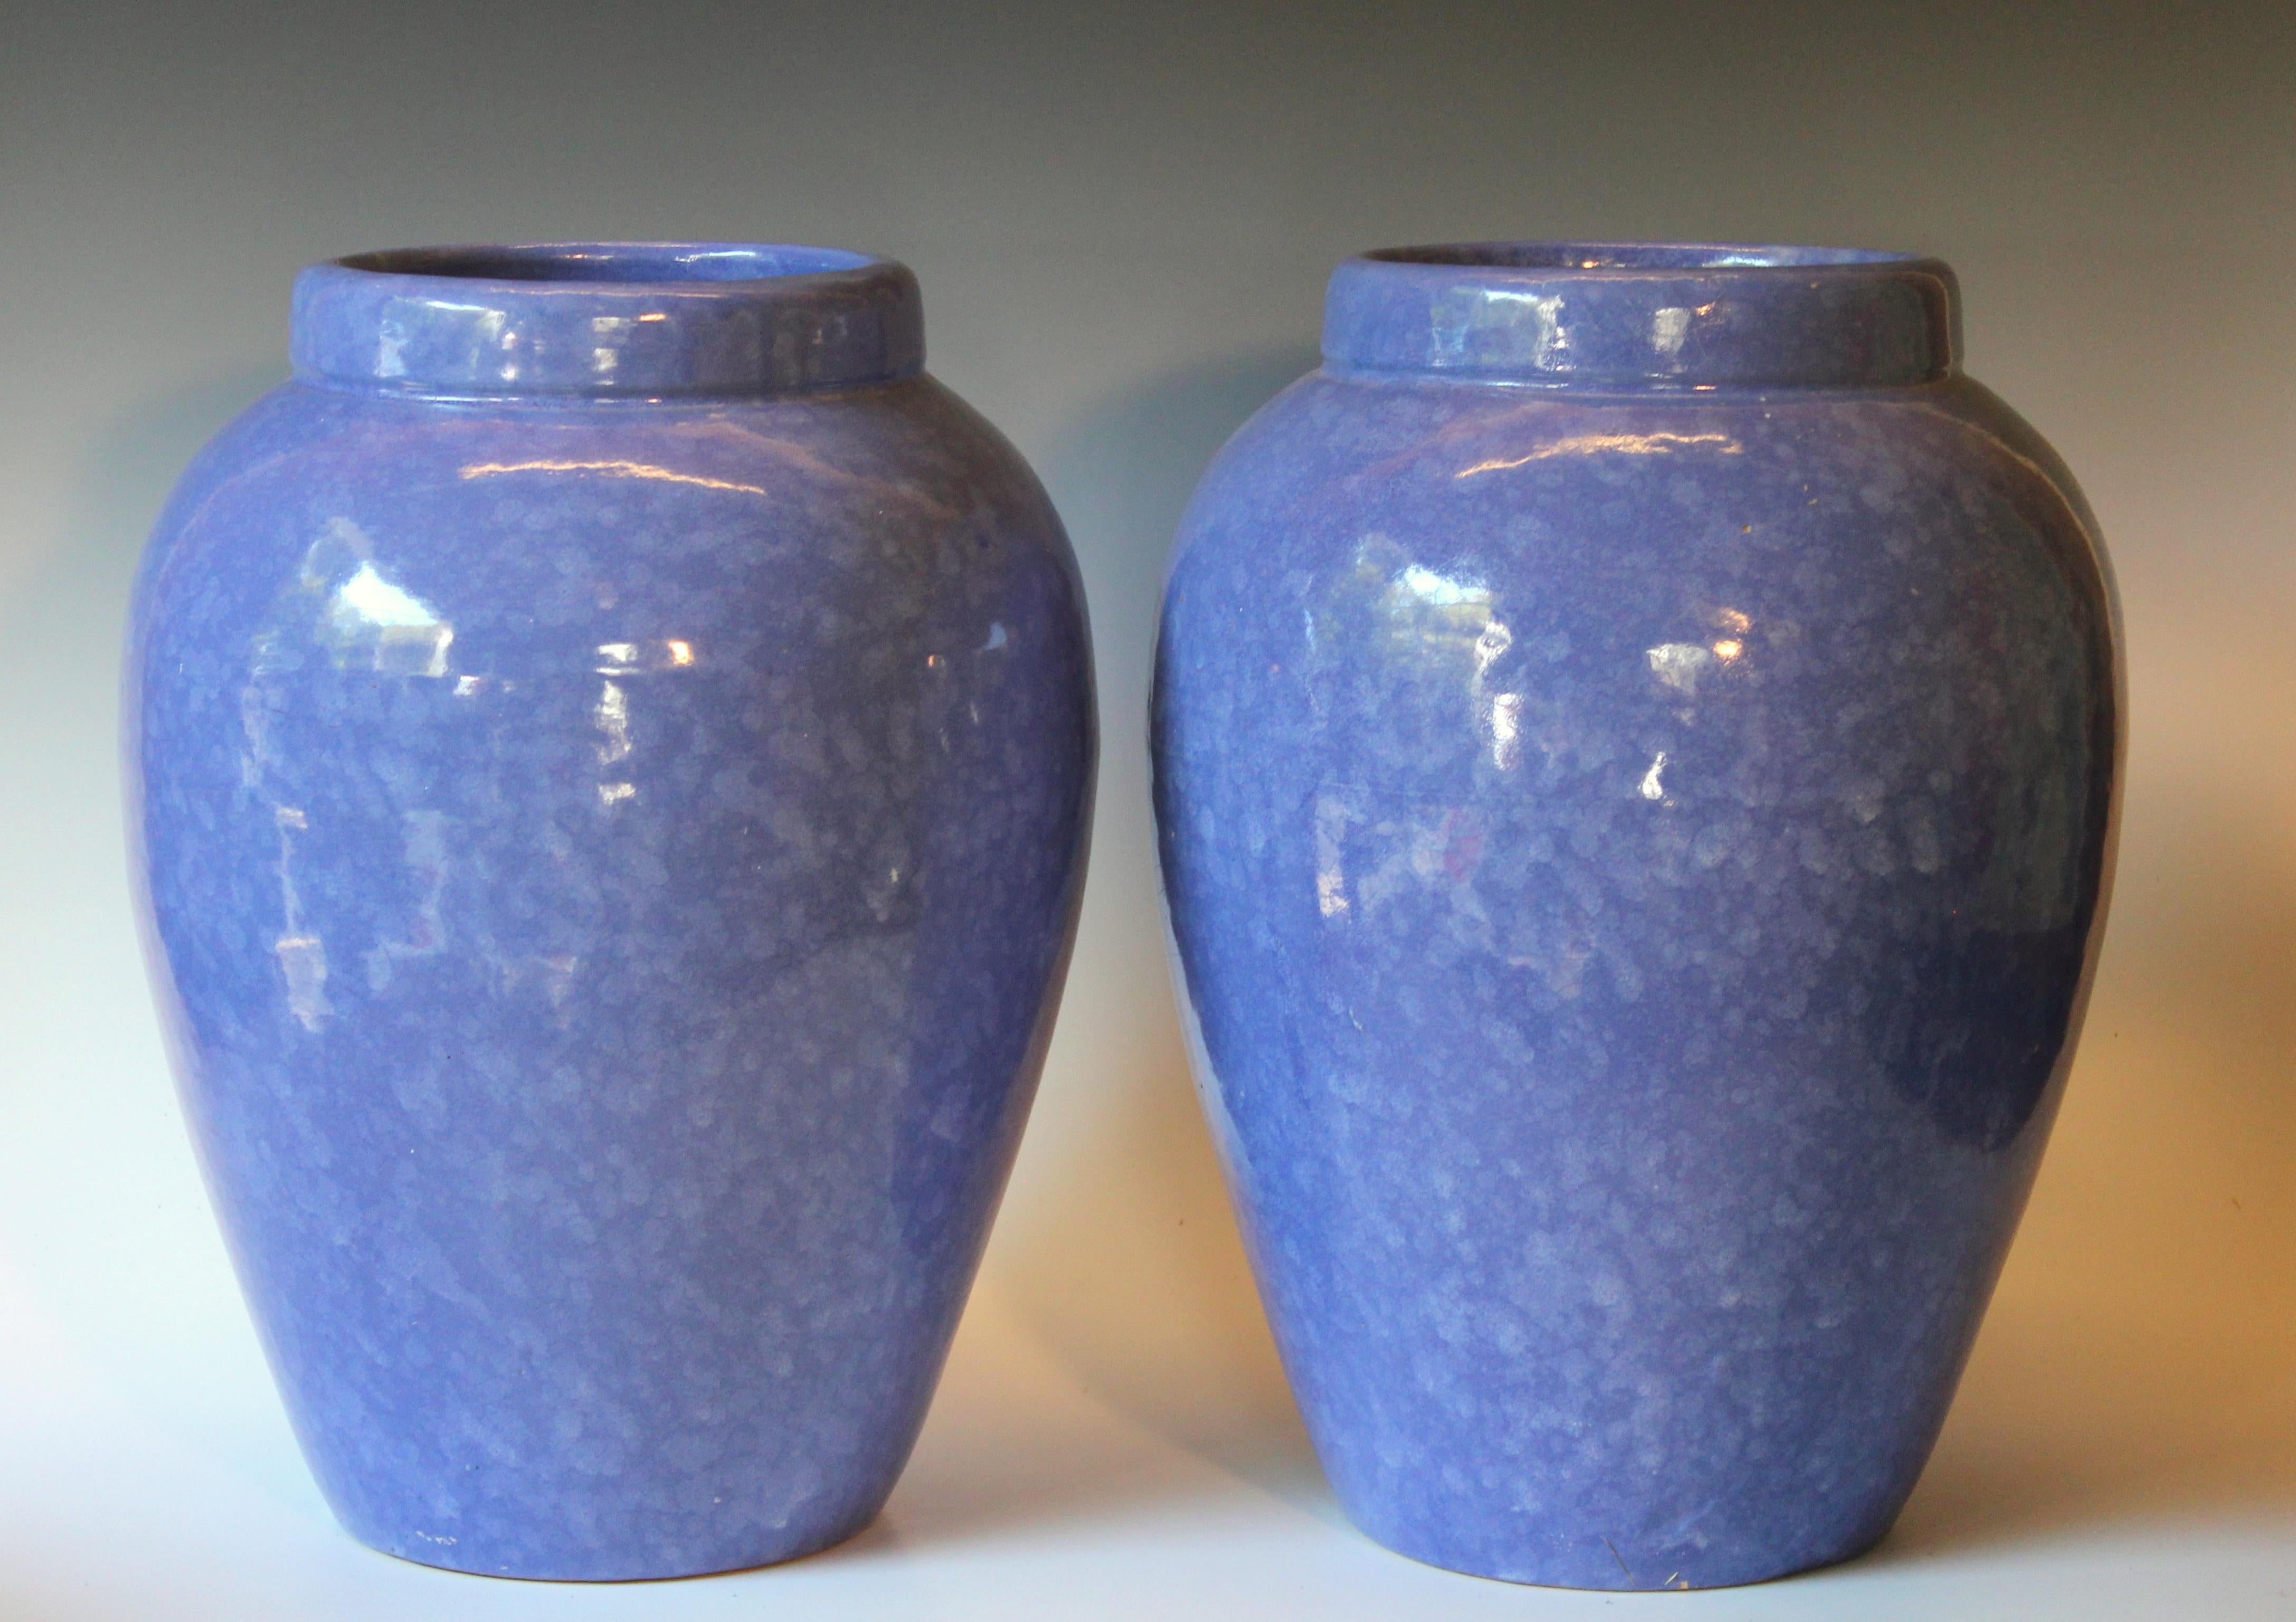 Art Deco RRP CO Oil Jars McCoy Vases Mottled Blue Large Vintage Floor Pottery Urns, Pair